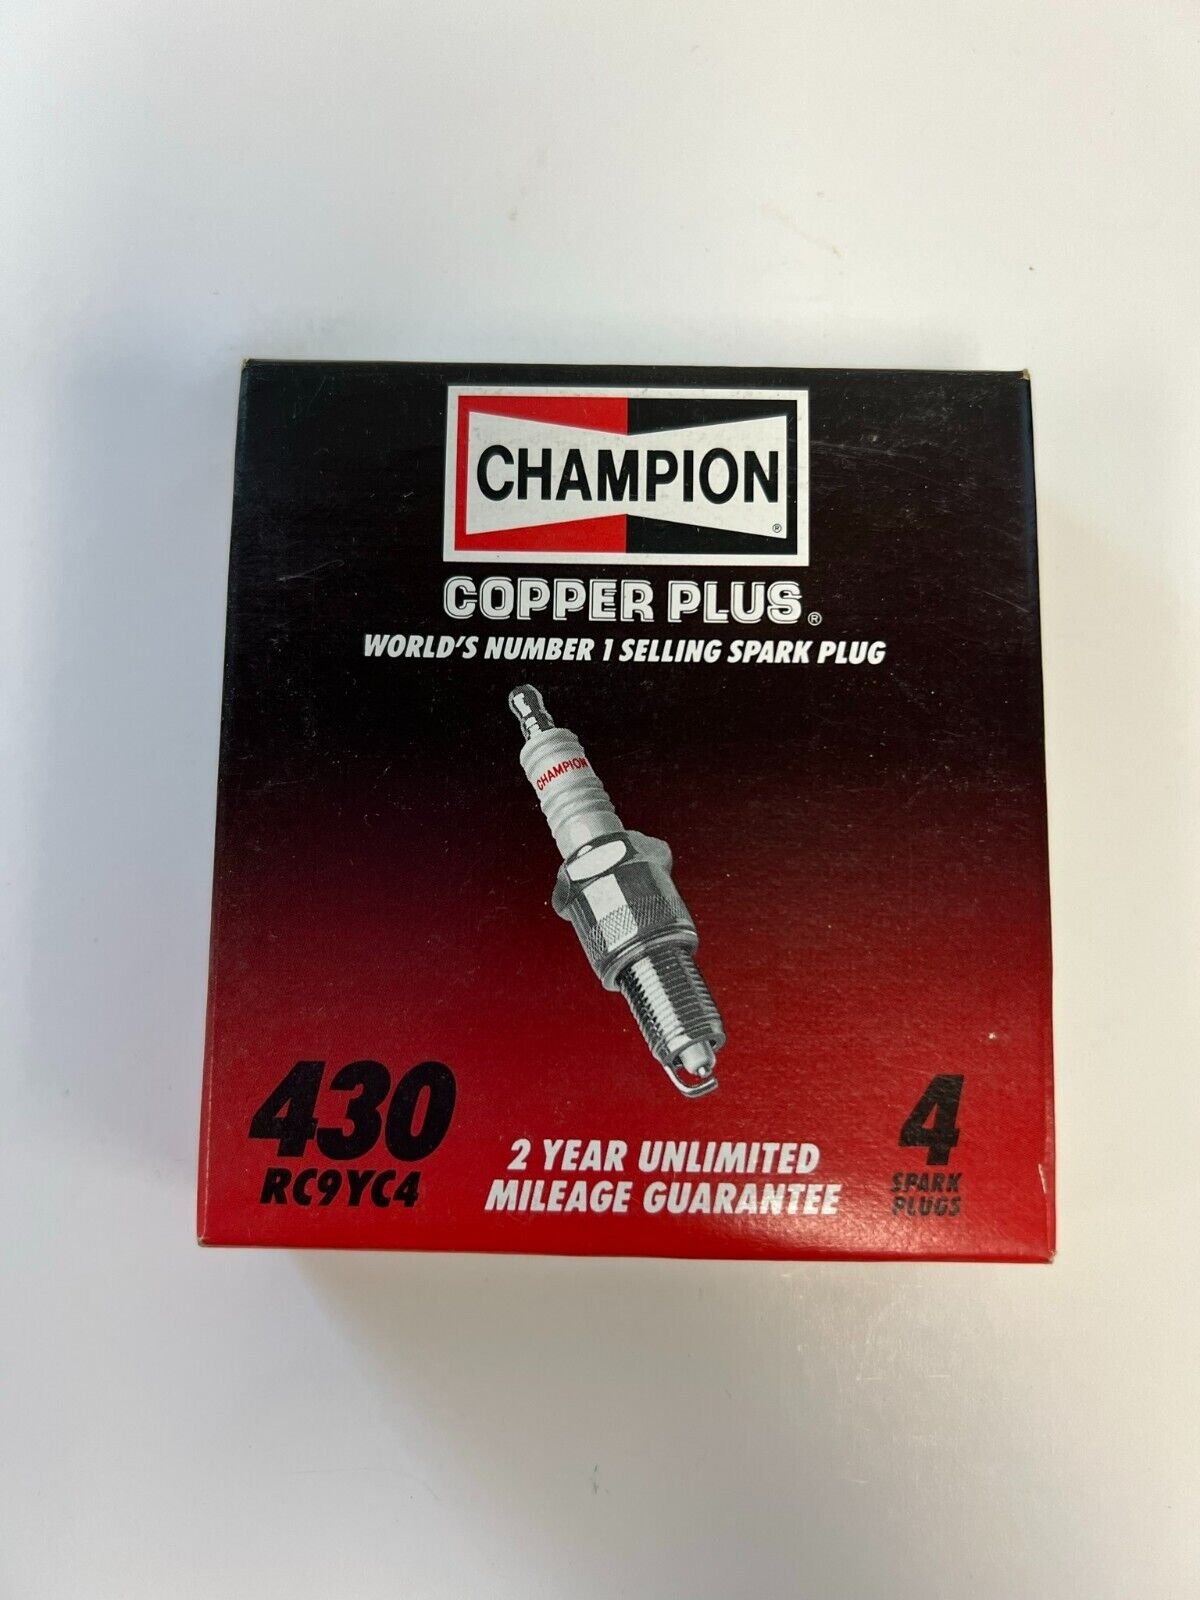 Champion Copper Plus 430 RC9YC4 Spark Plugs - Box of 4